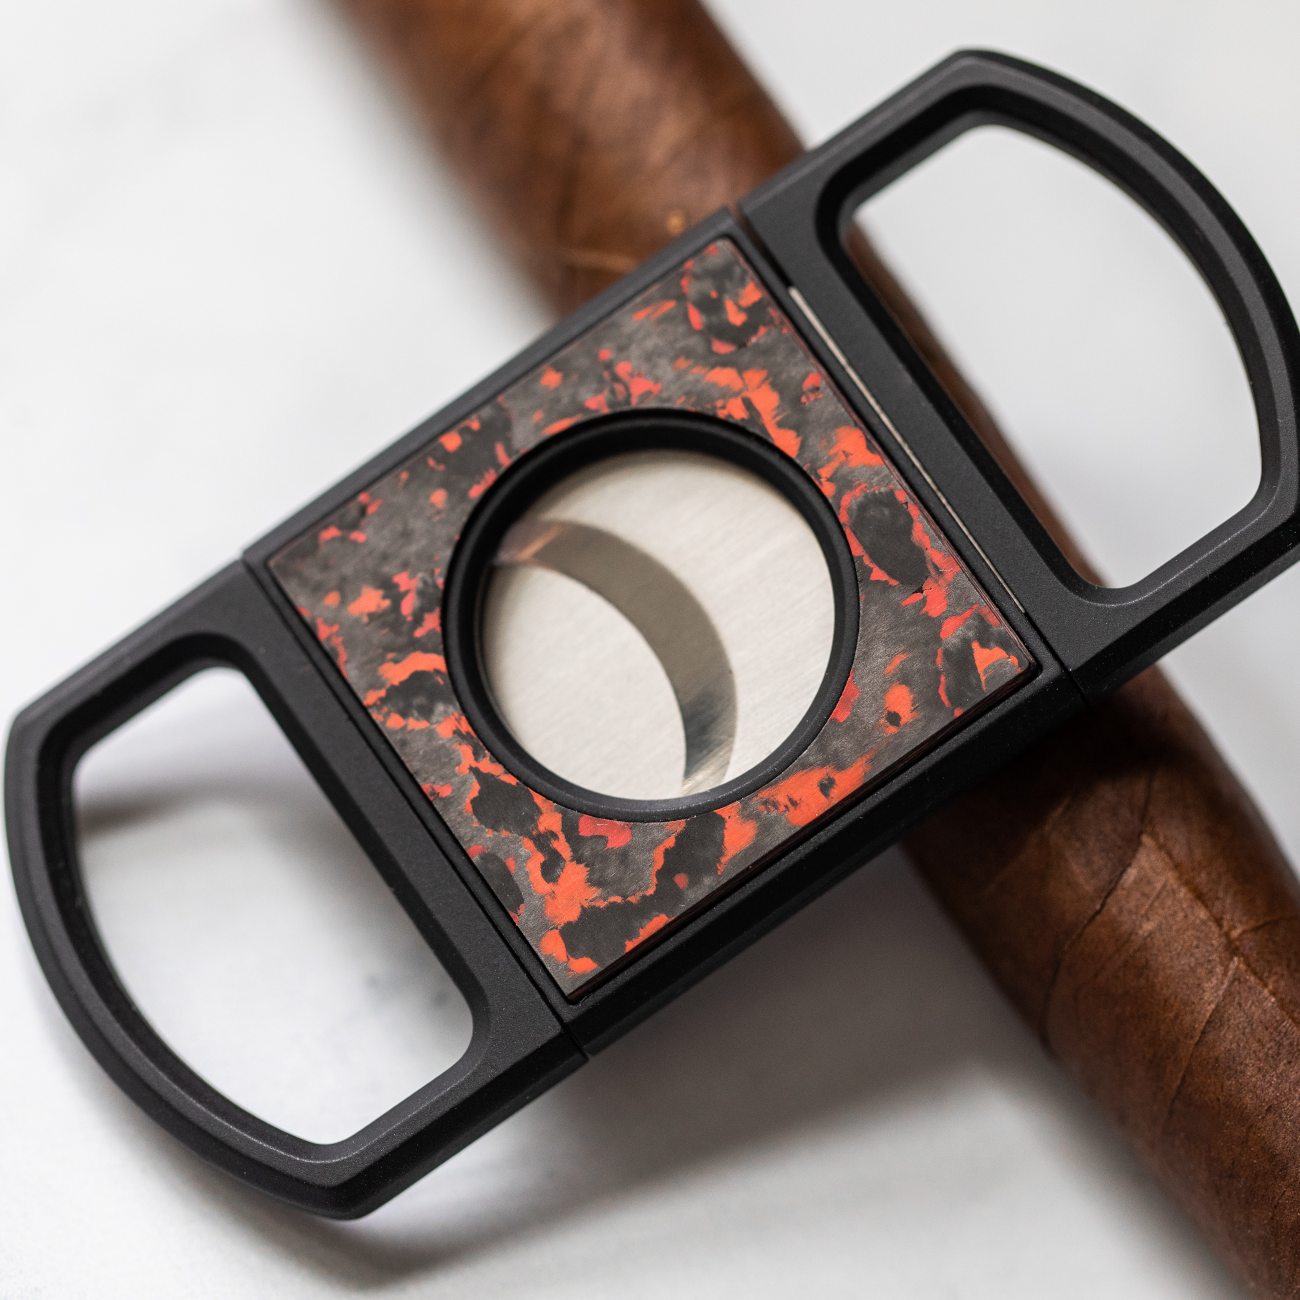 S.T. Dupont Carbon Cigar Cutter - Fiery Lava